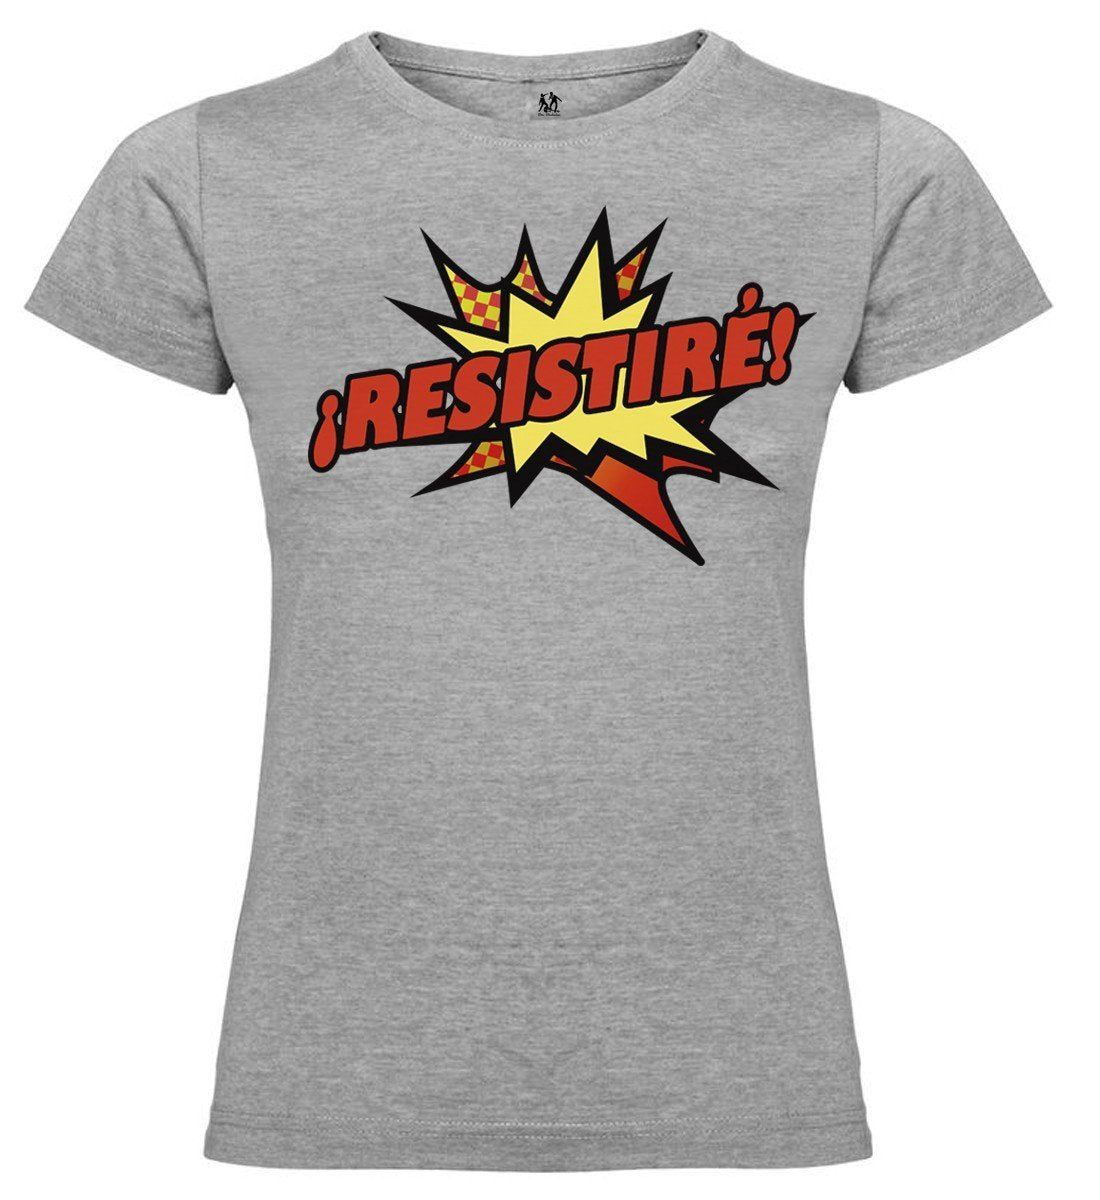 El Dúo Dinámico - Camiseta Chica "Resistiré" - D2fy · Rocktud - Duo Dinámico